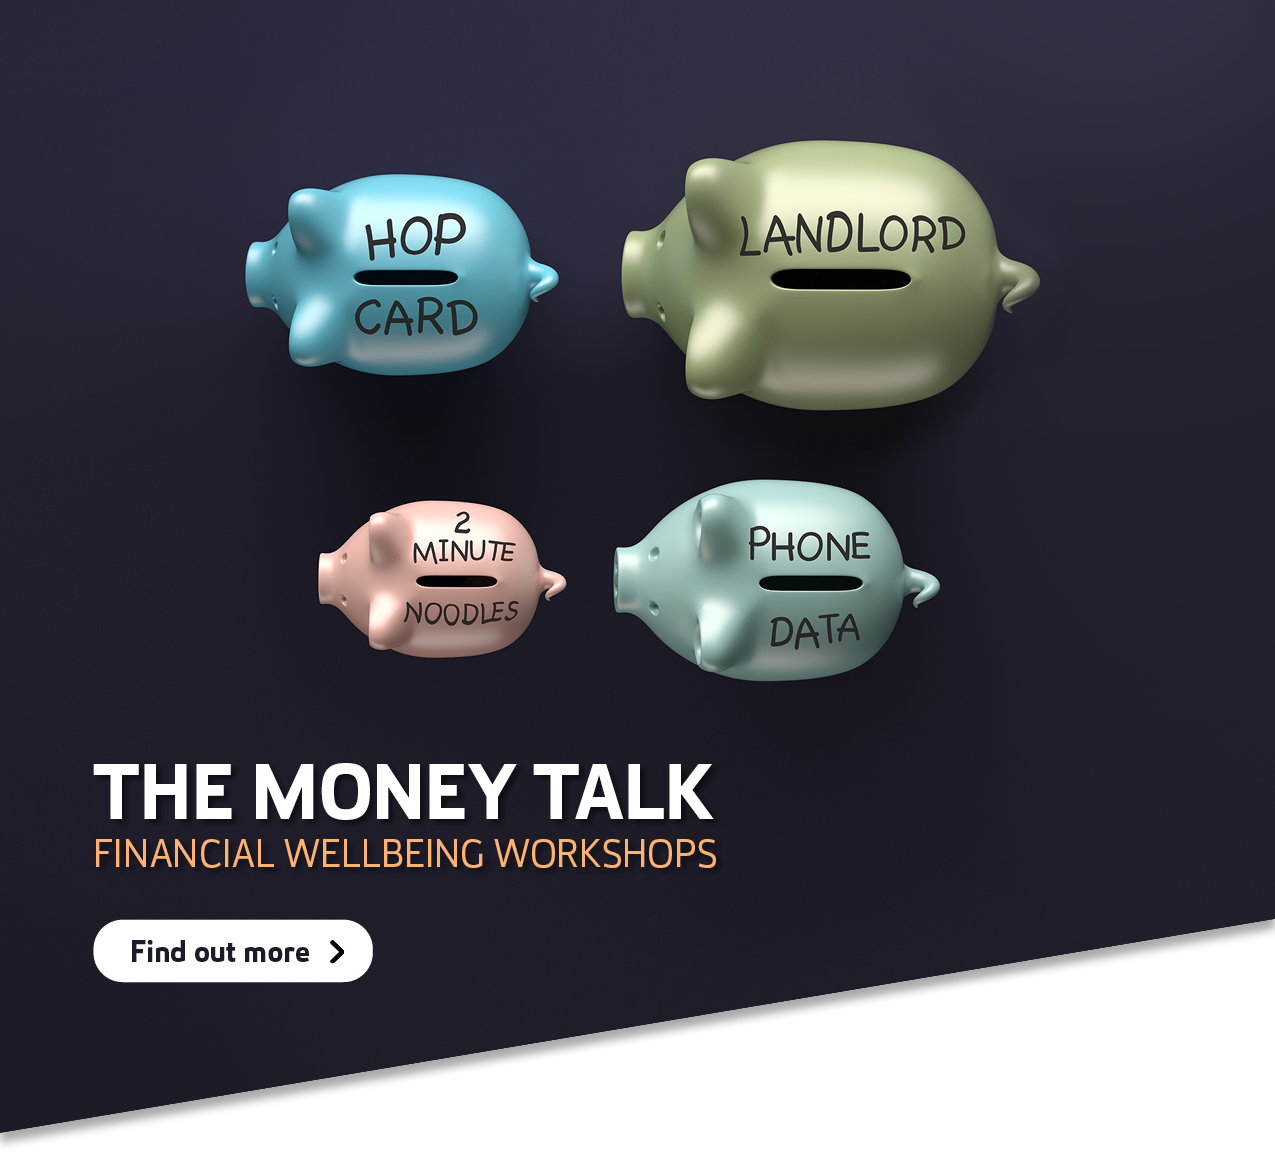 Piggy banks promoting financial wellbeing workshops